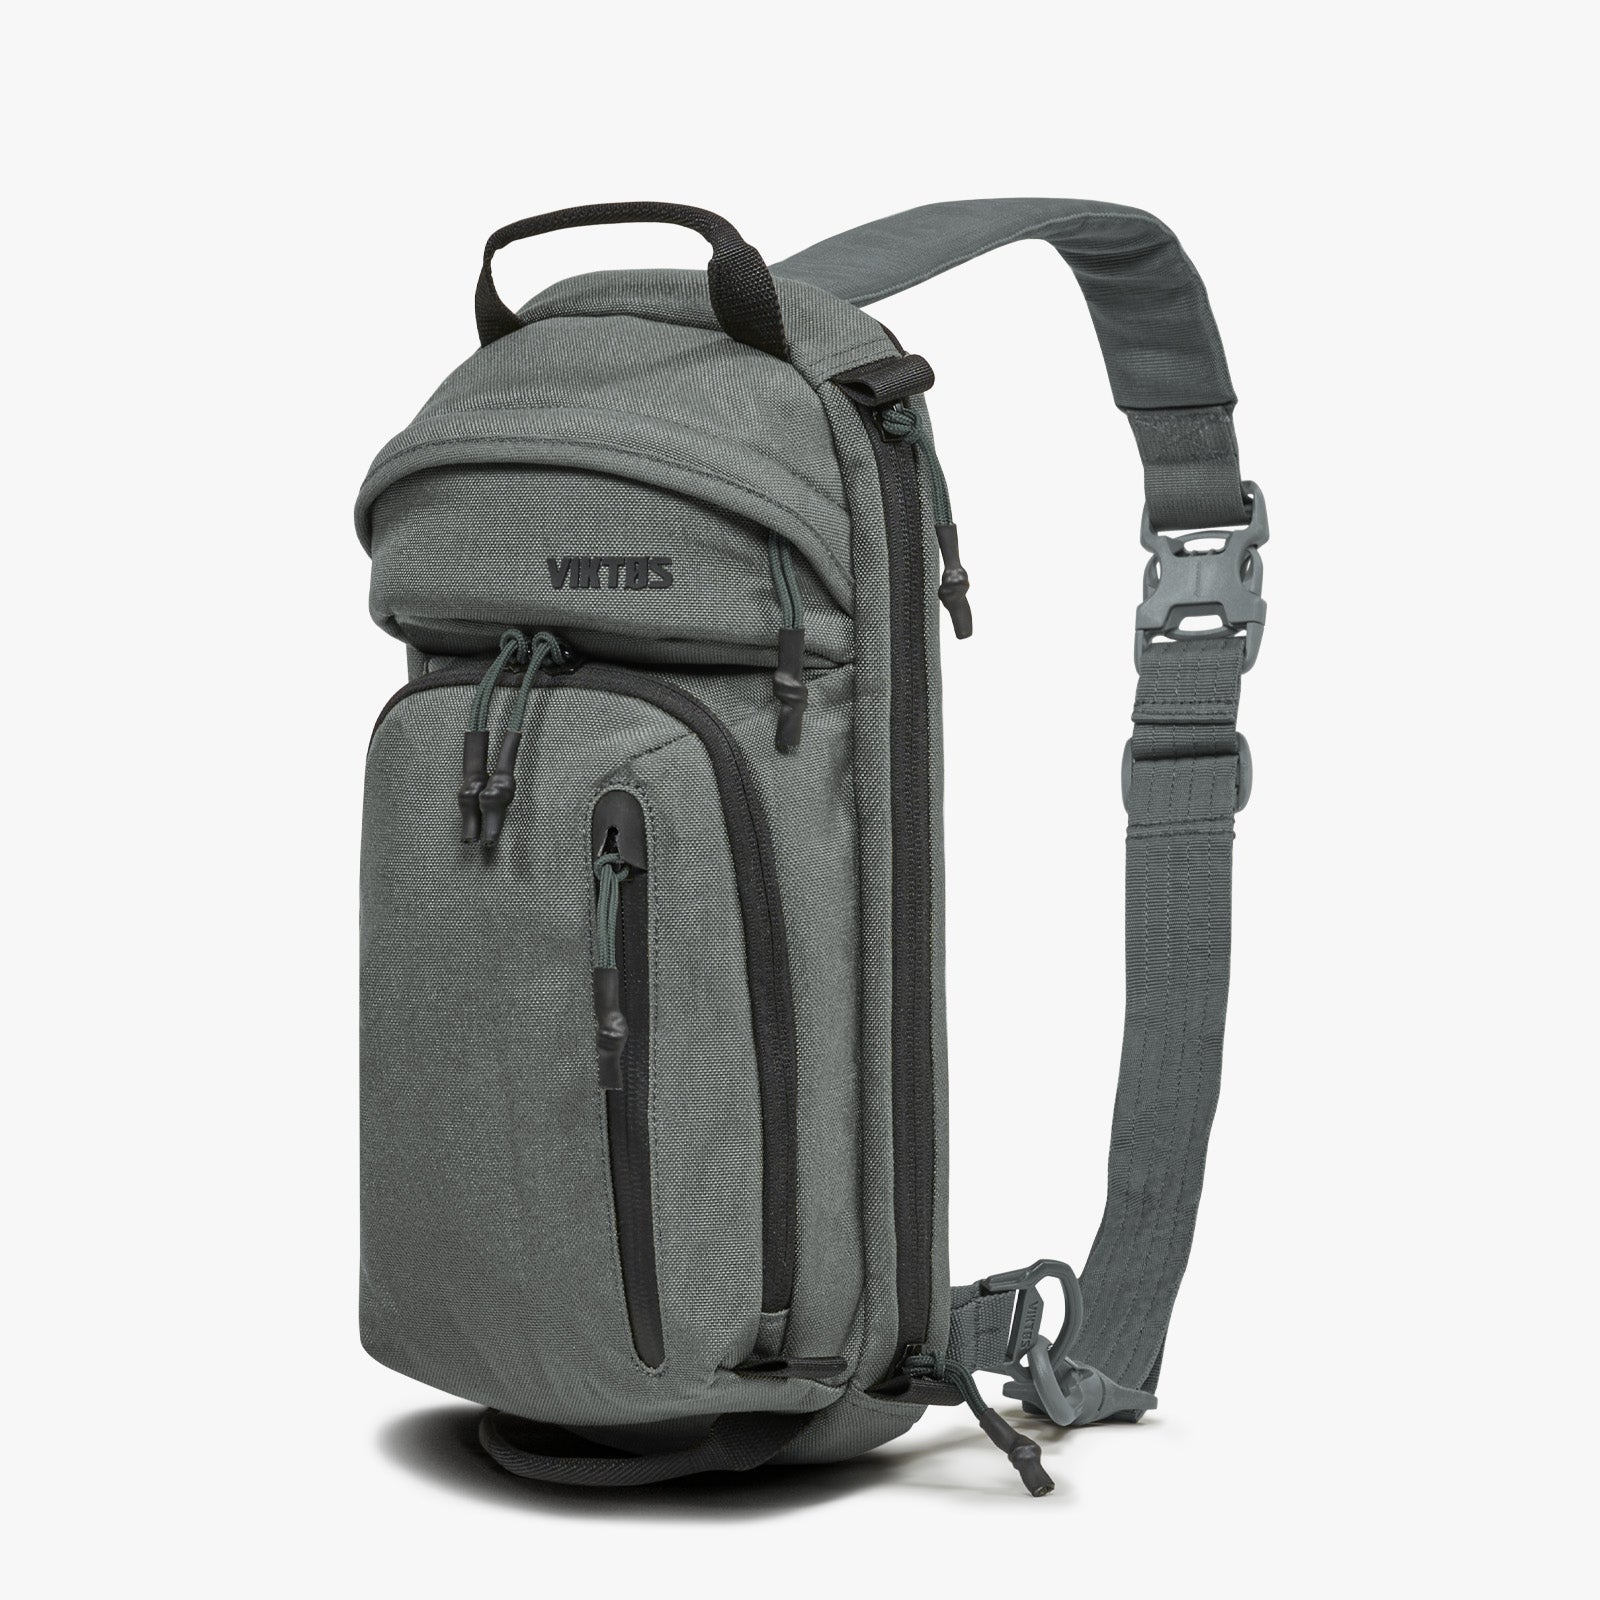 VIKTOS Upscale 3 Sling Bag Bags, Packs and Cases VIKTOS Greyman Tactical Gear Supplier Tactical Distributors Australia